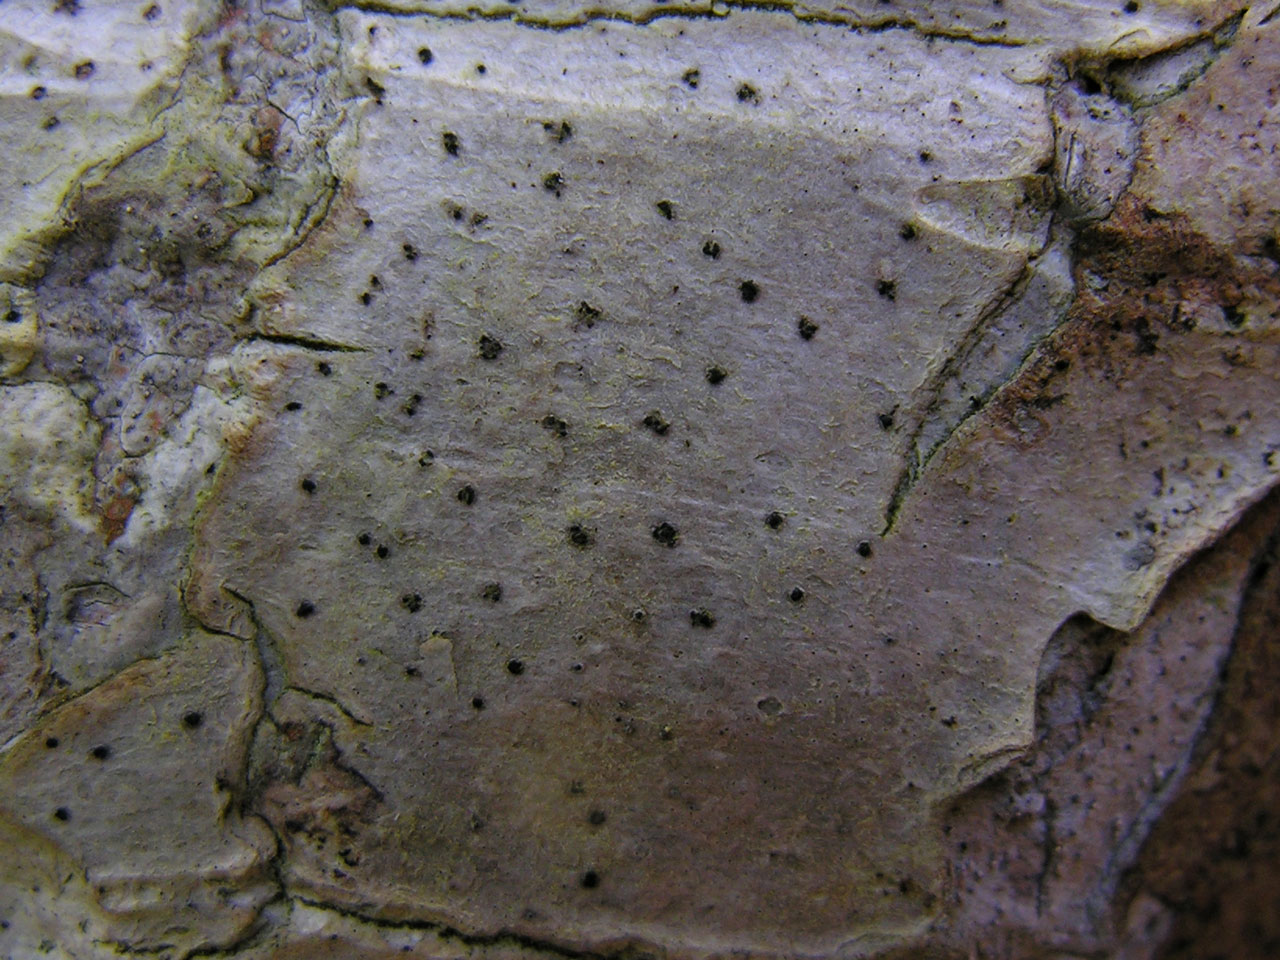 Mycoporum lacteum, Holly, St James's Hill, New Forest